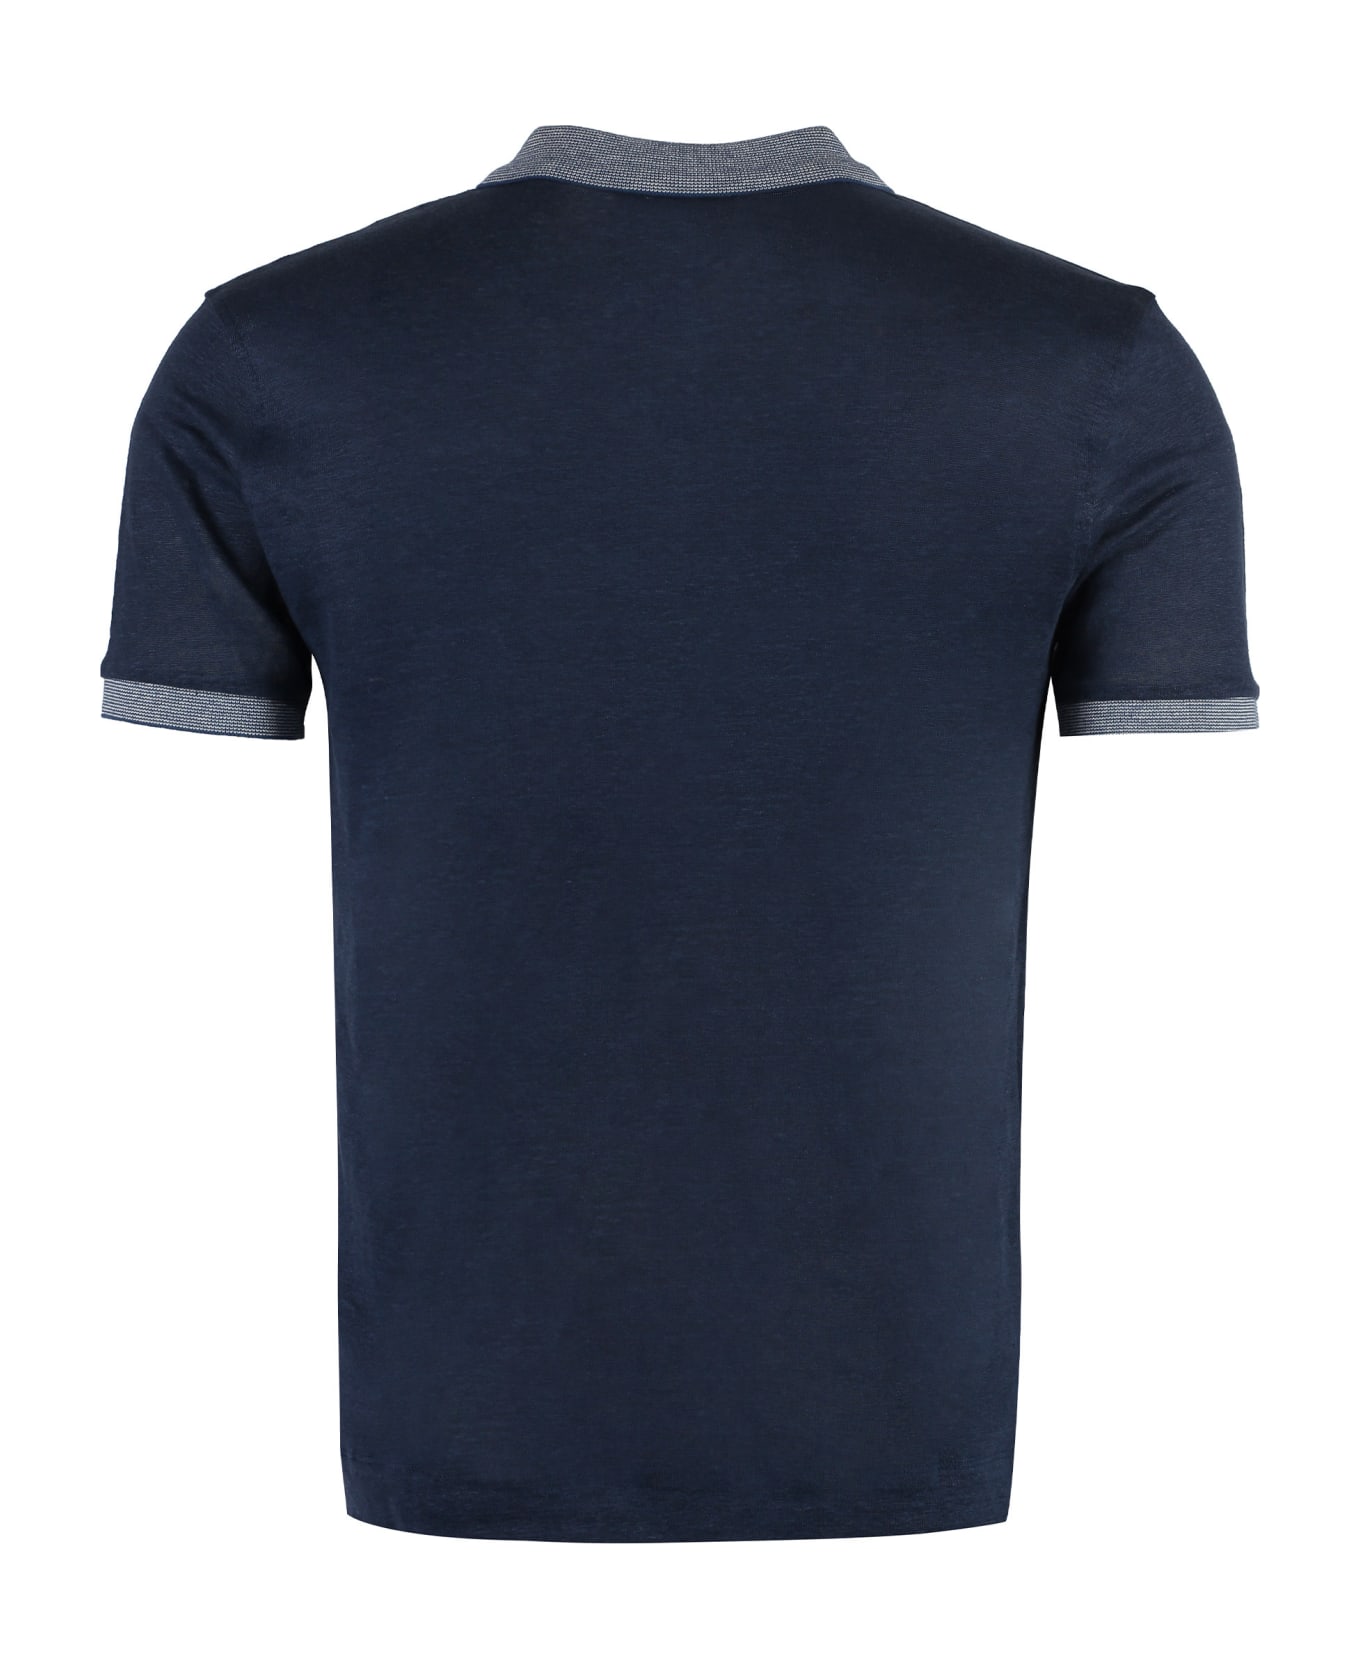 Vilebrequin Short Sleeve Polo Shirt - blue